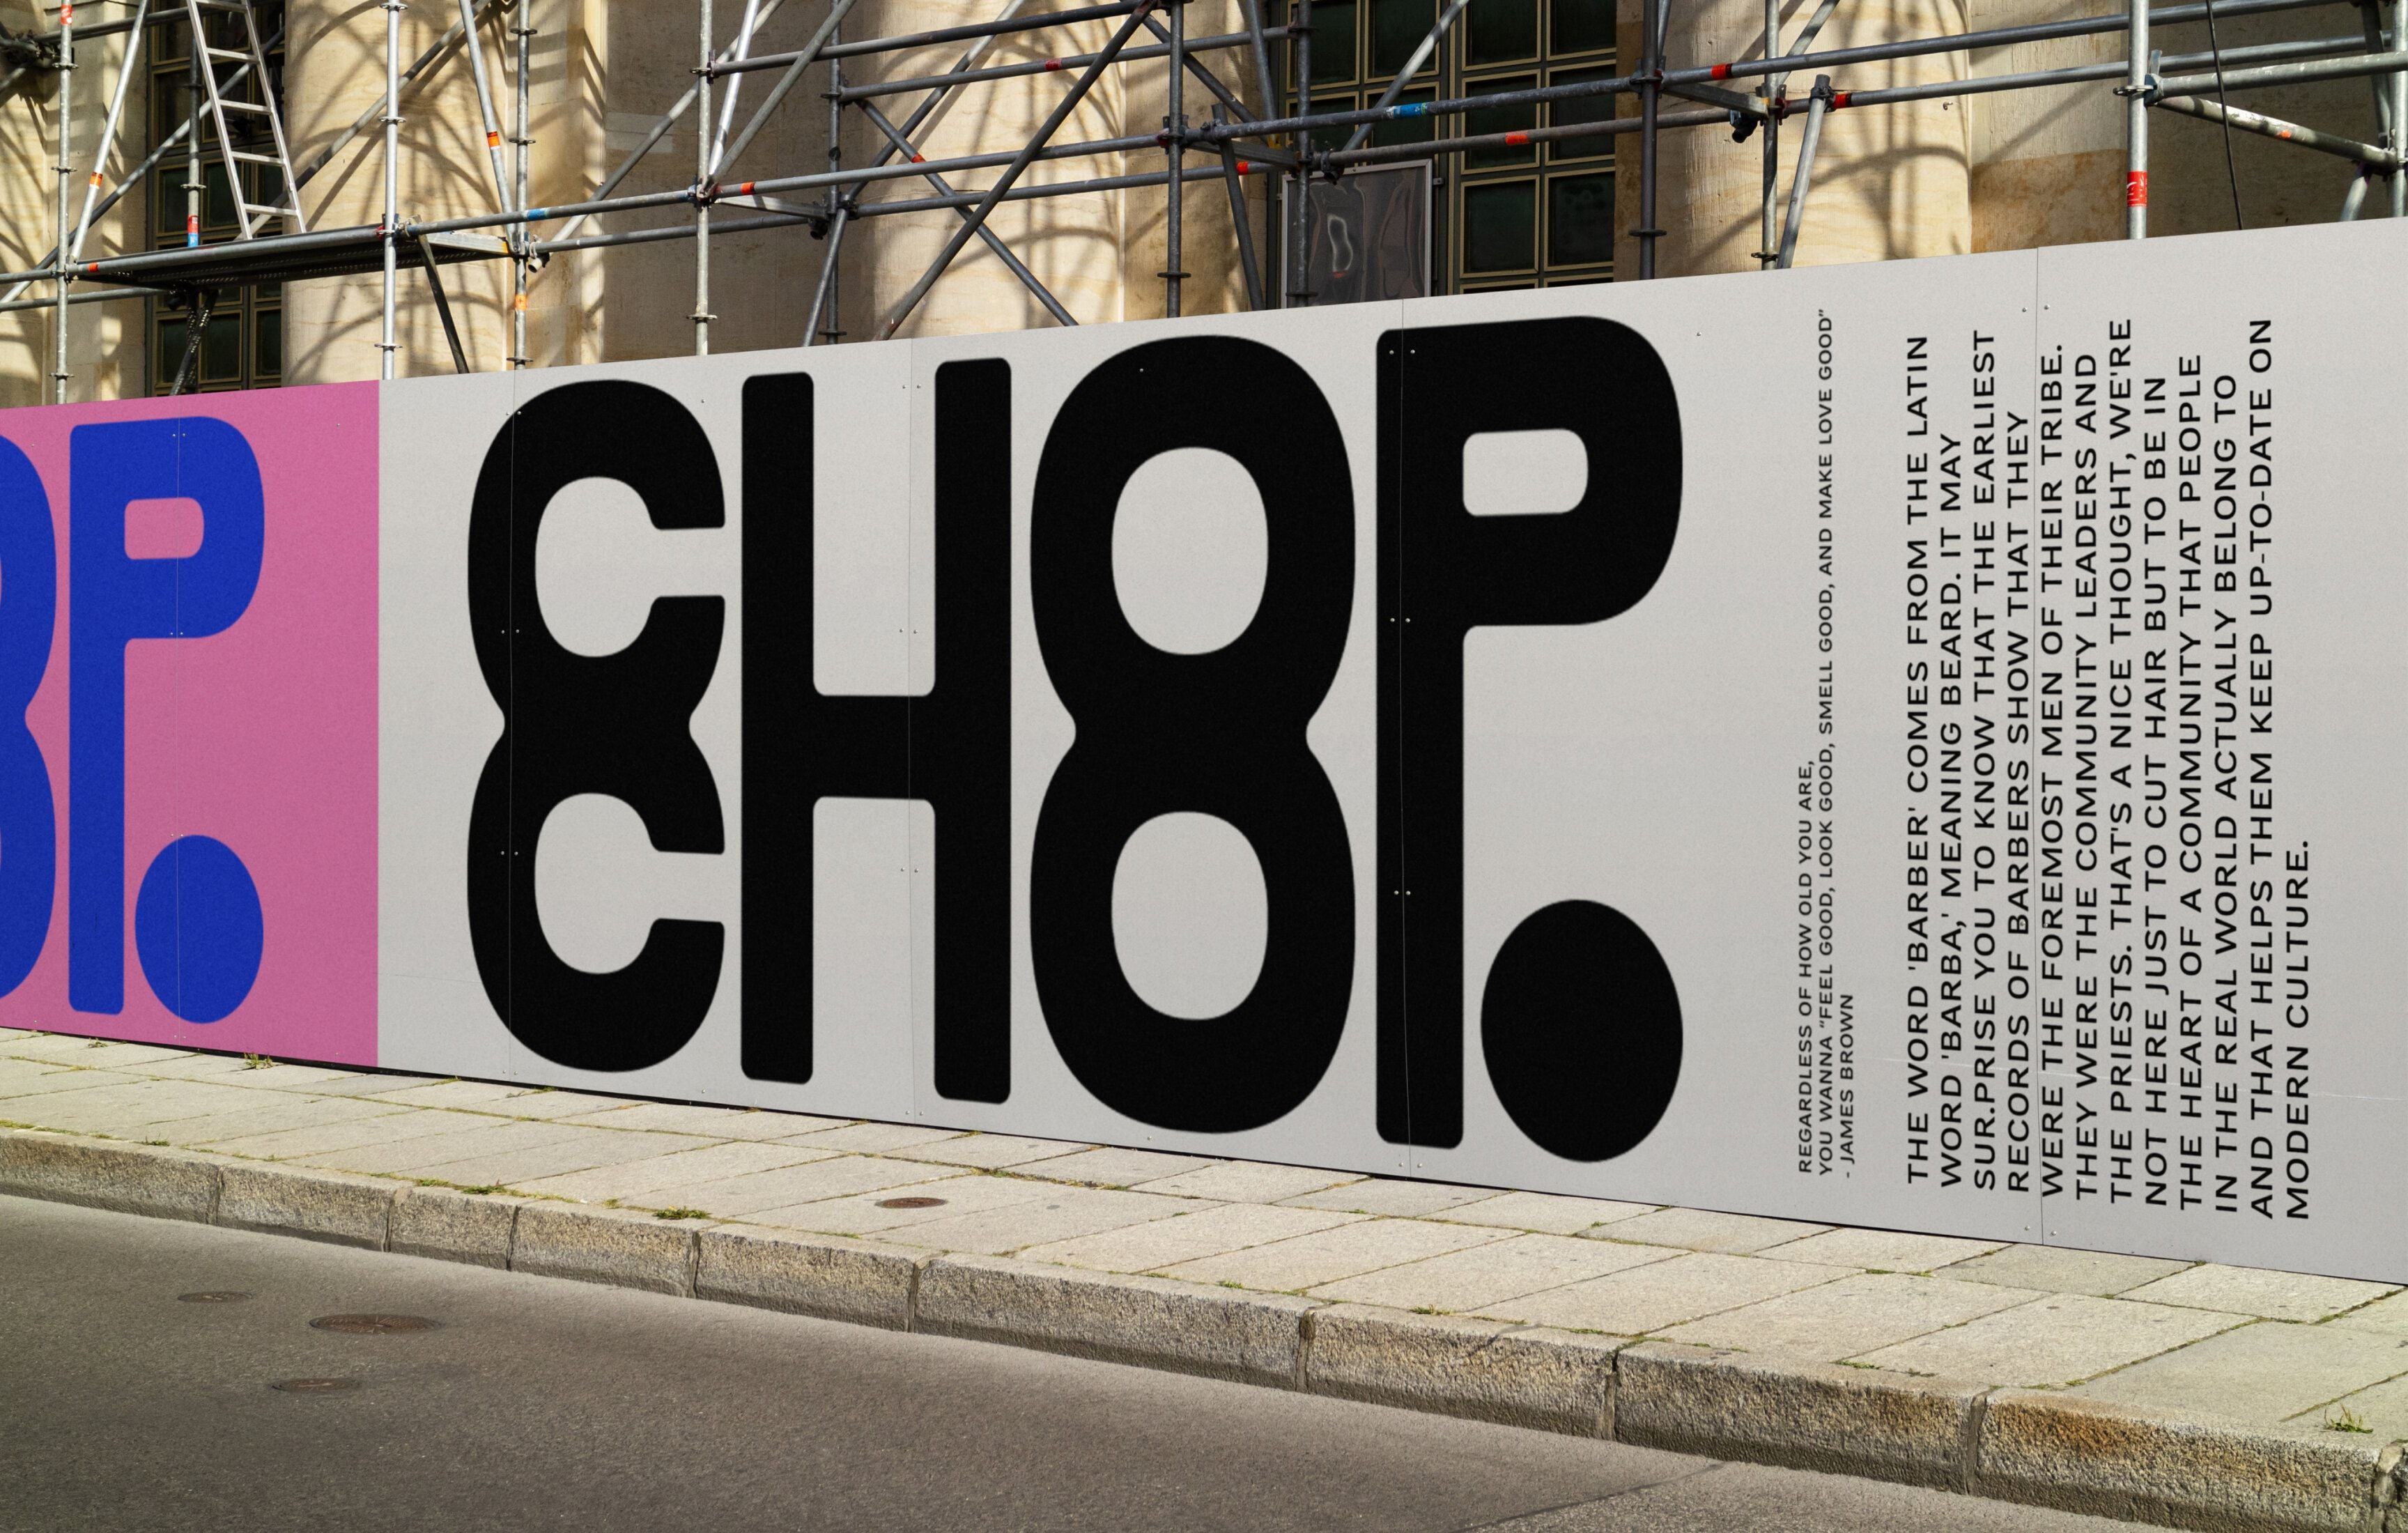 Chop X Chop advertisement